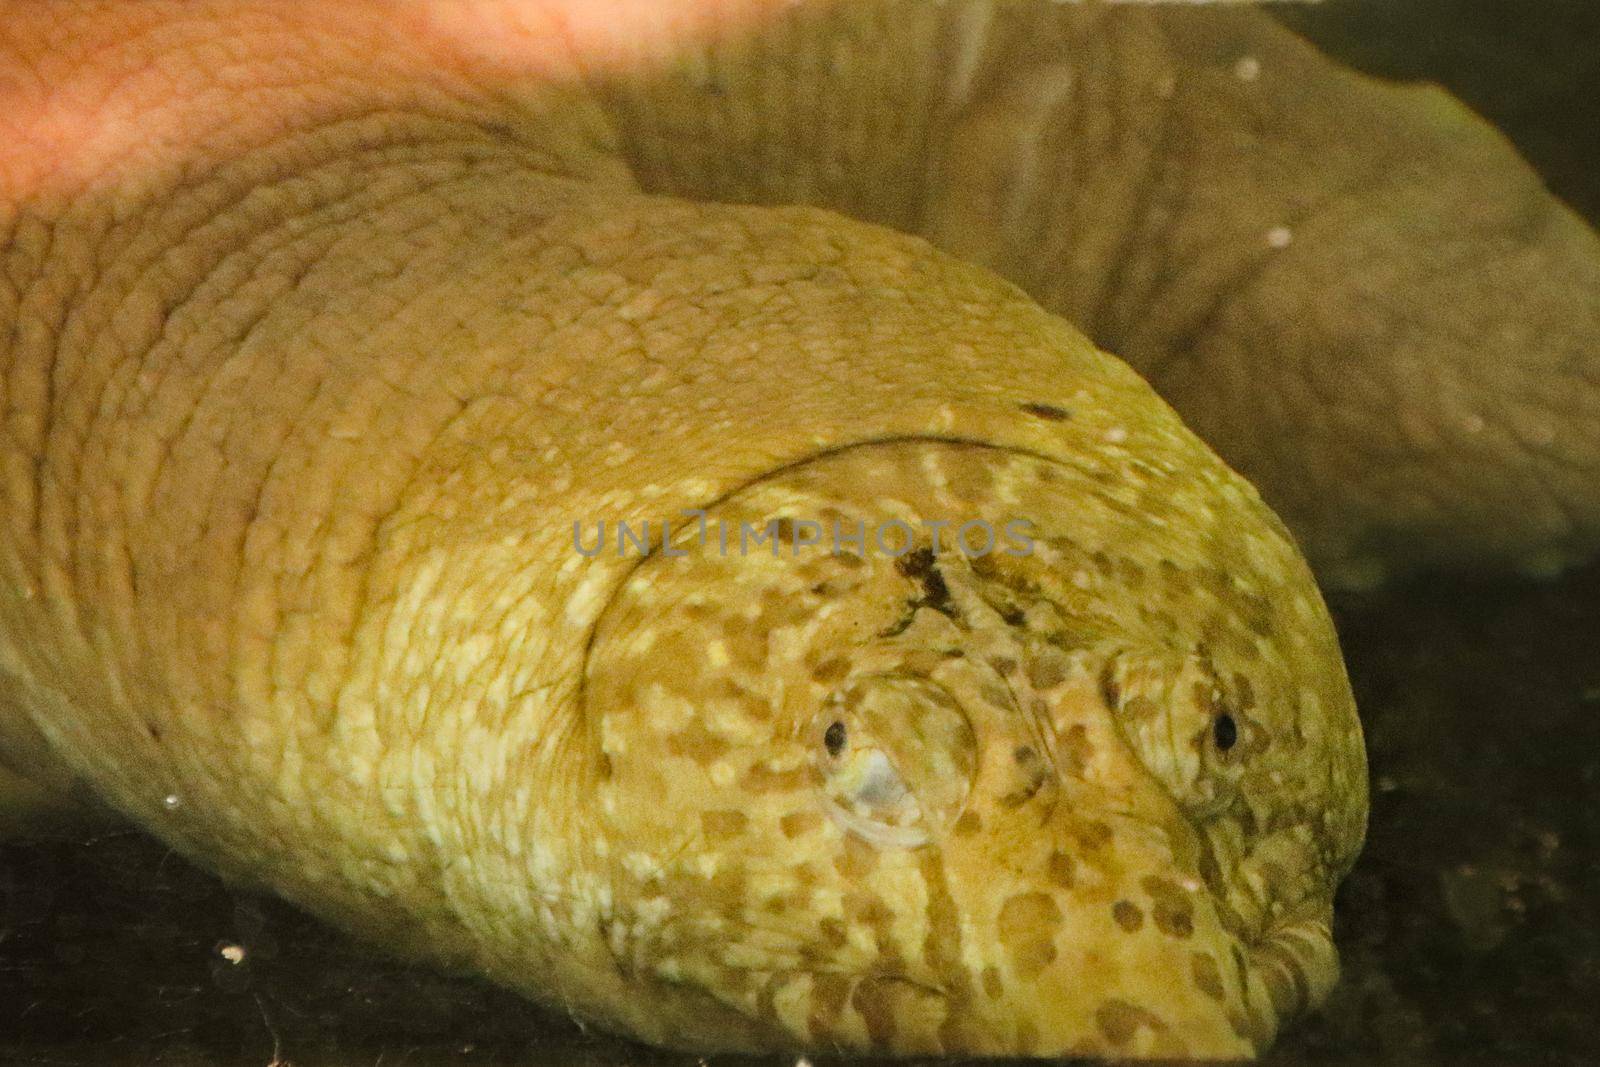 Close up of a Rafetus swinhoei or Yangtze giant softshell turtle head